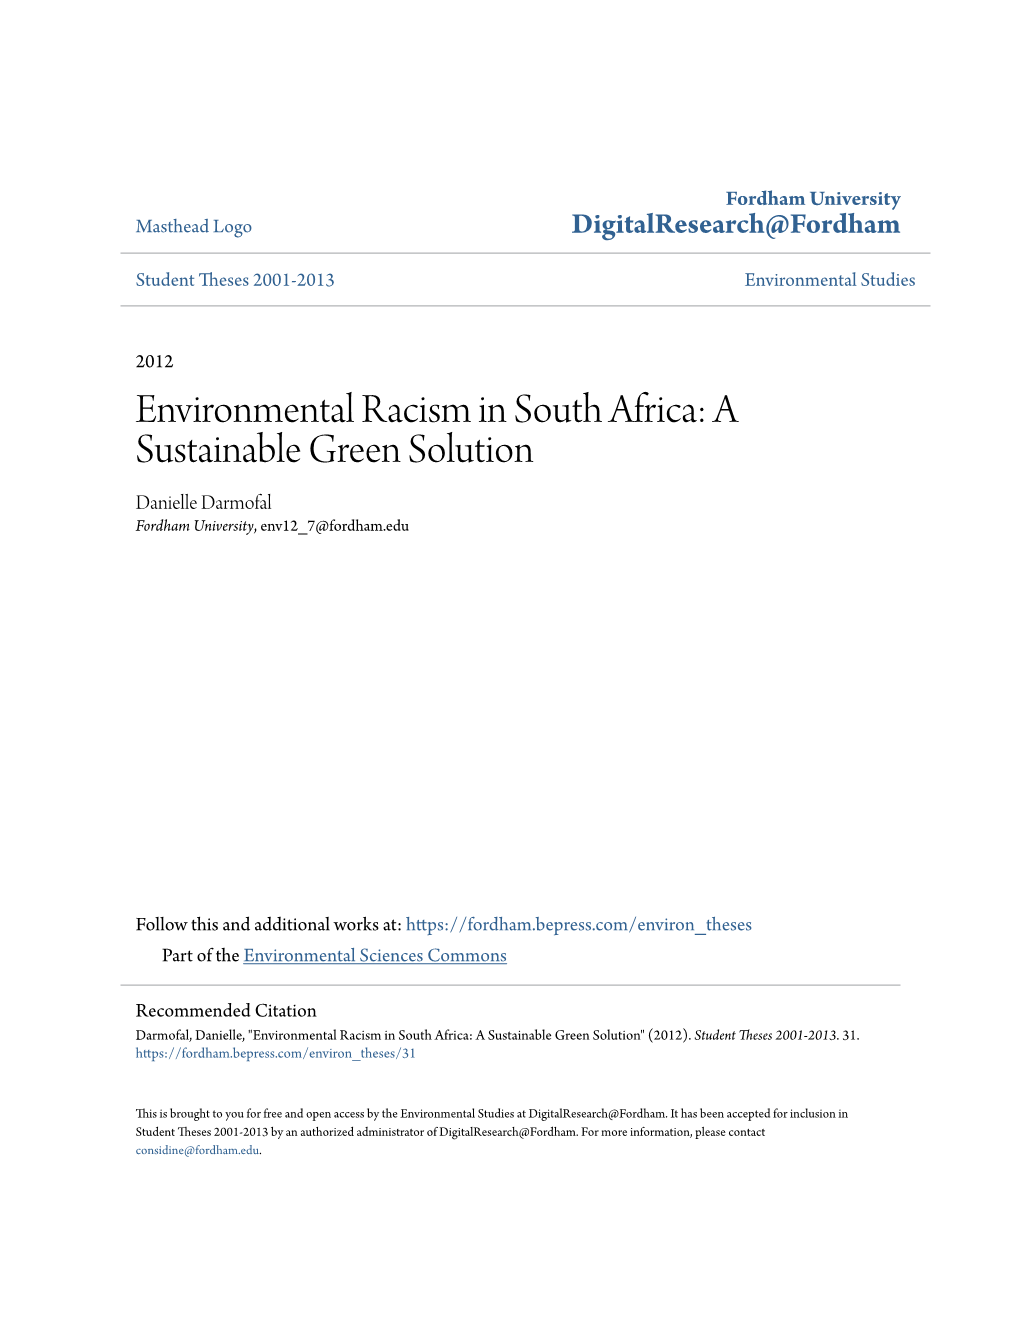 Environmental Racism in South Africa: a Sustainable Green Solution Danielle Darmofal Fordham University, Env12 7@Fordham.Edu